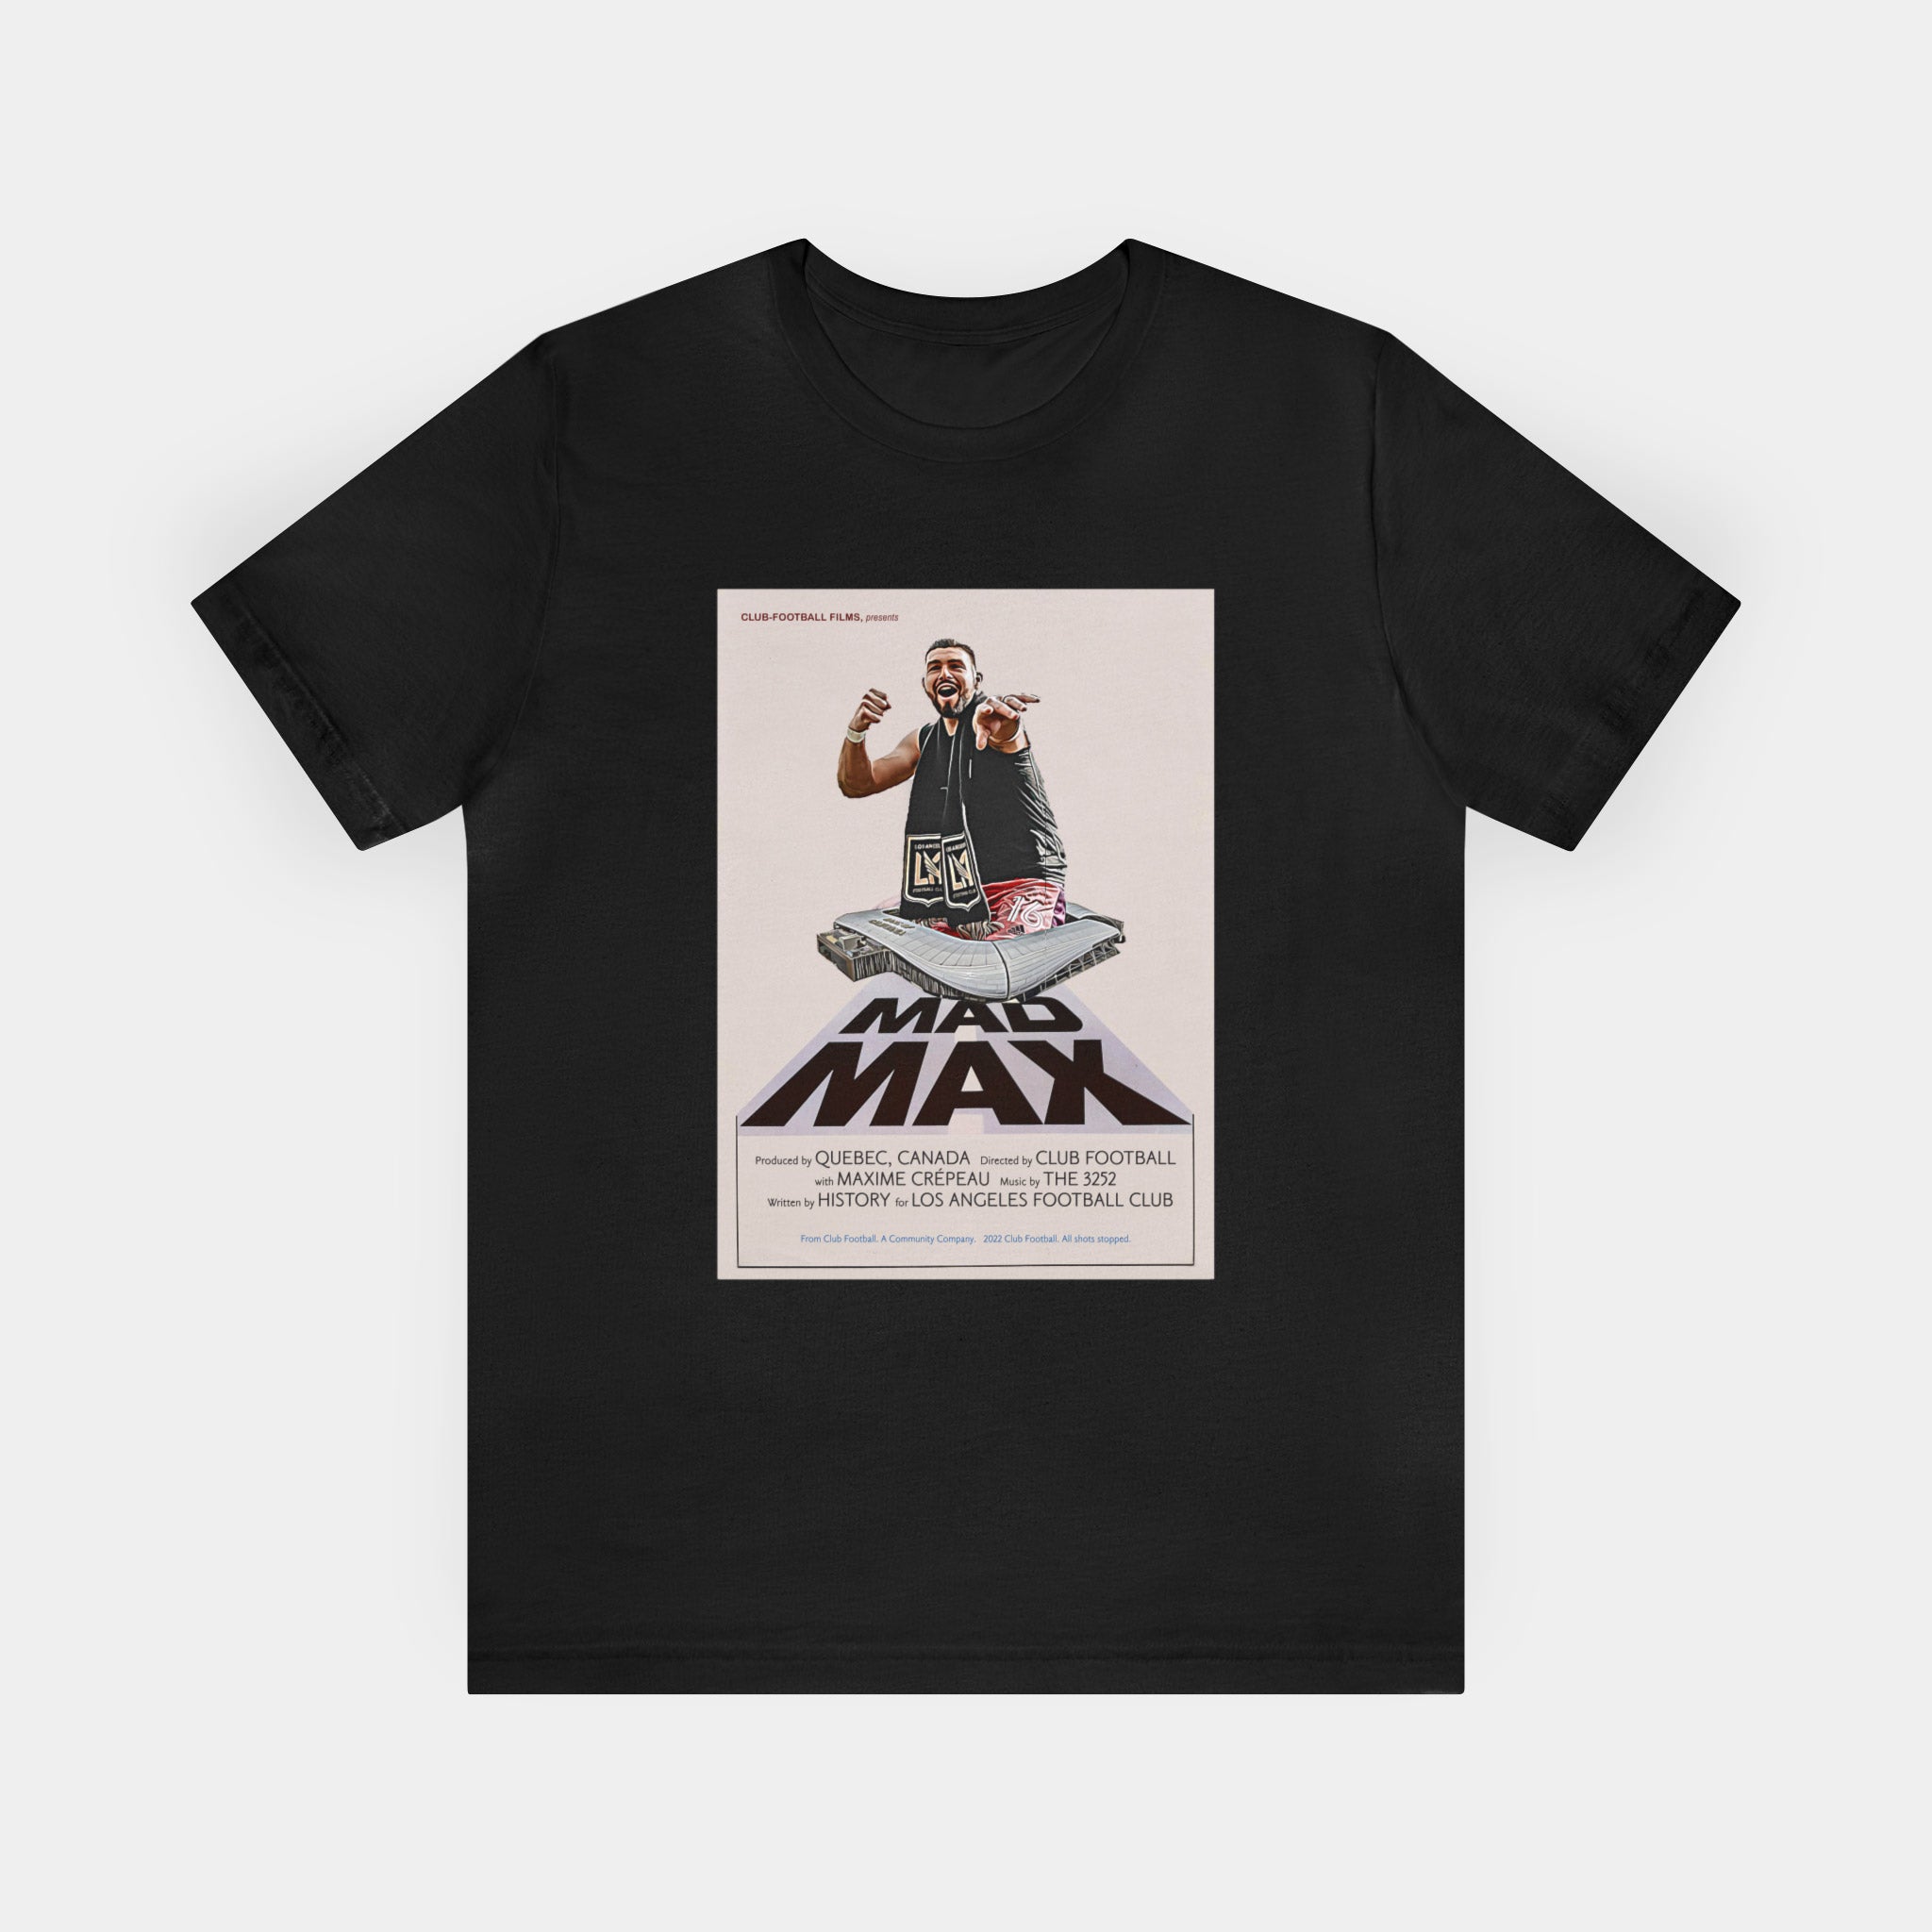 Mad Max Crépeau (LAFC) T-shirt